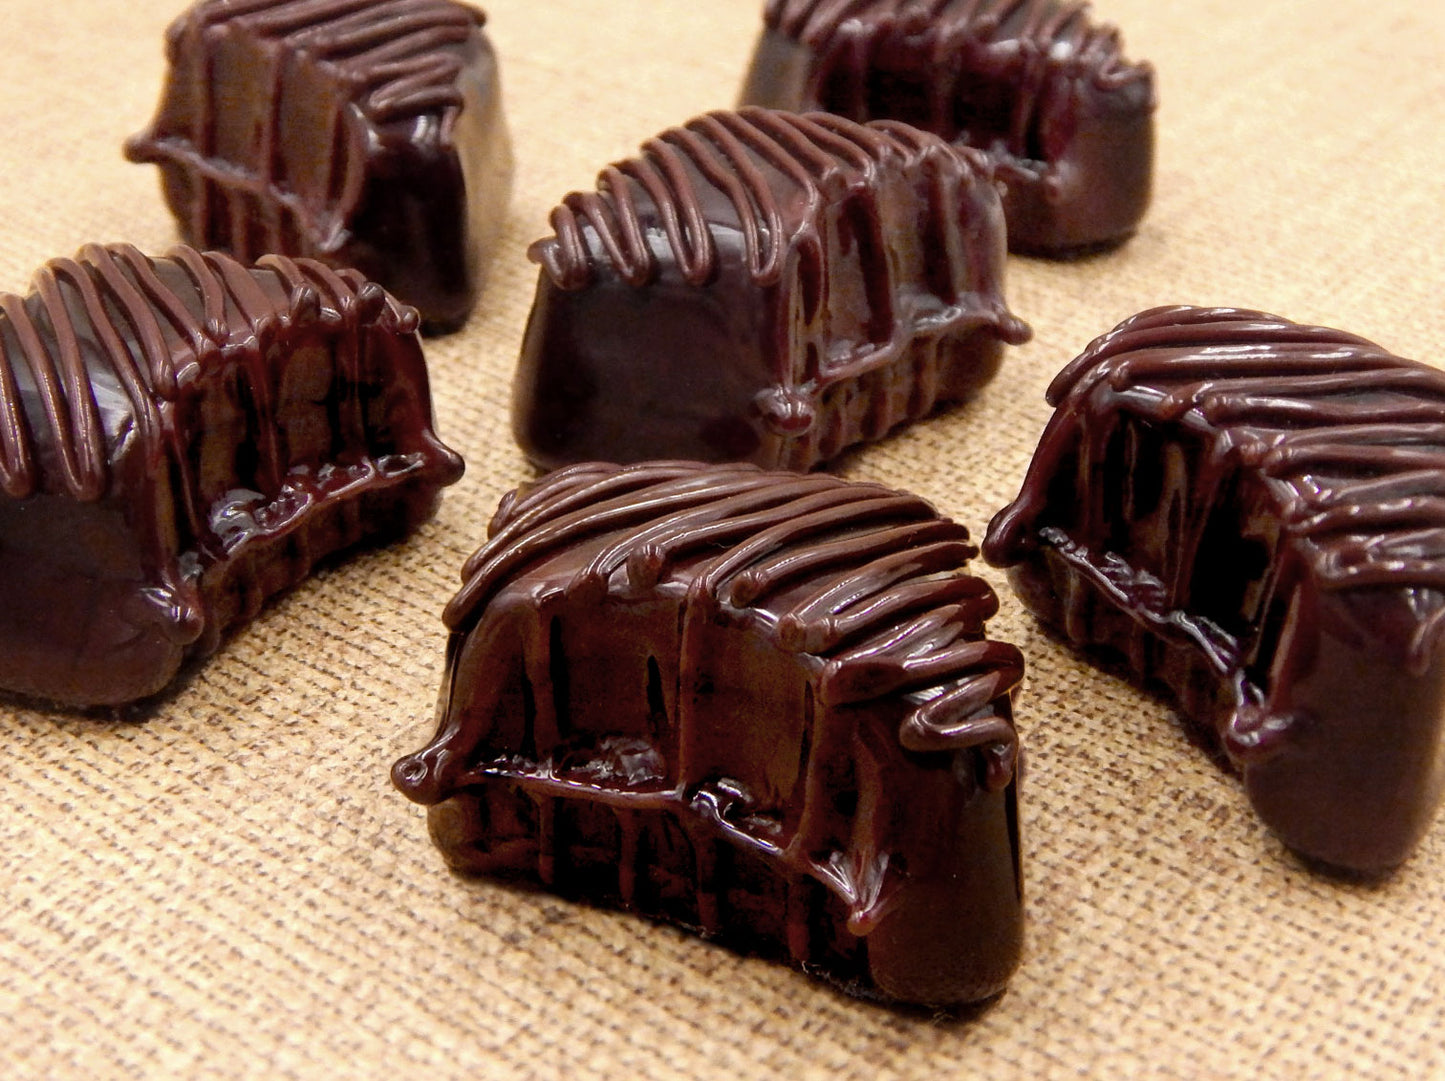 Bitten Chocolate with Chocolate Drizzle (B16-052C)